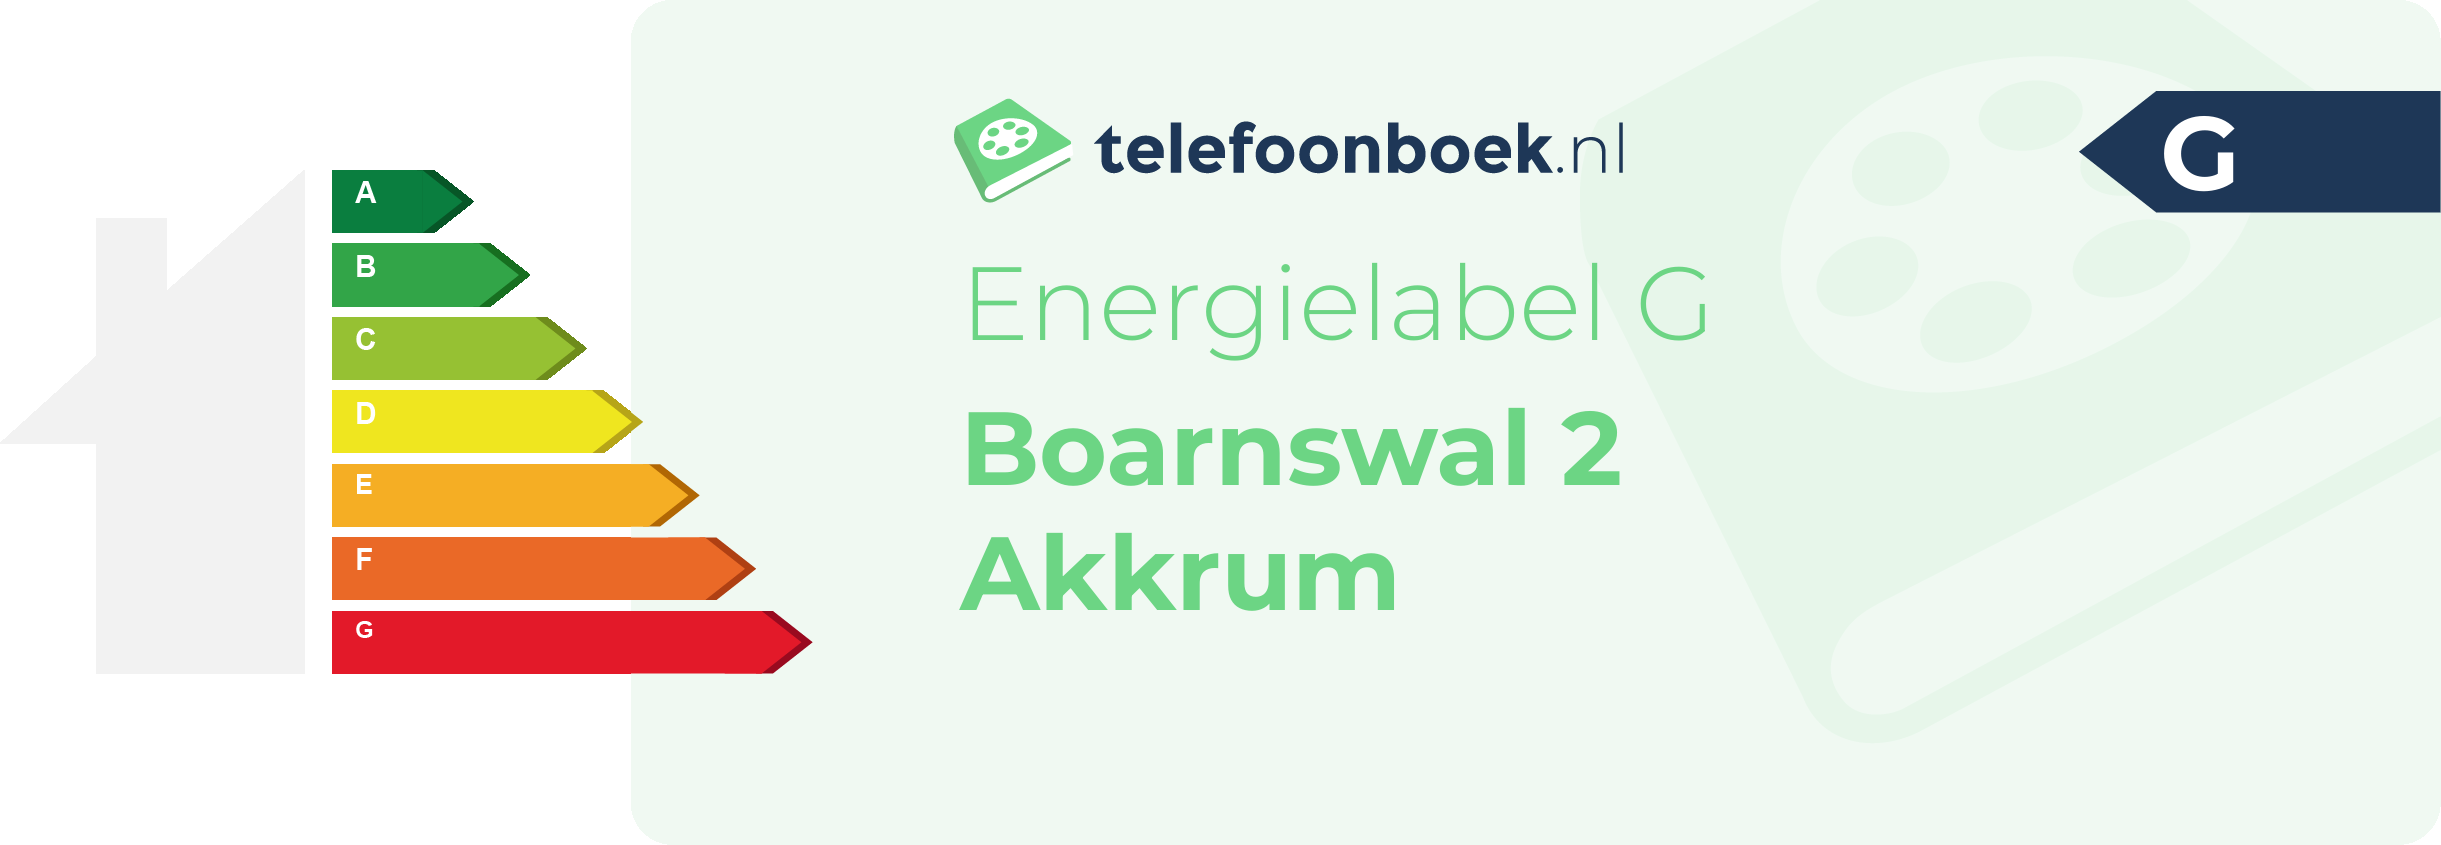 Energielabel Boarnswal 2 Akkrum